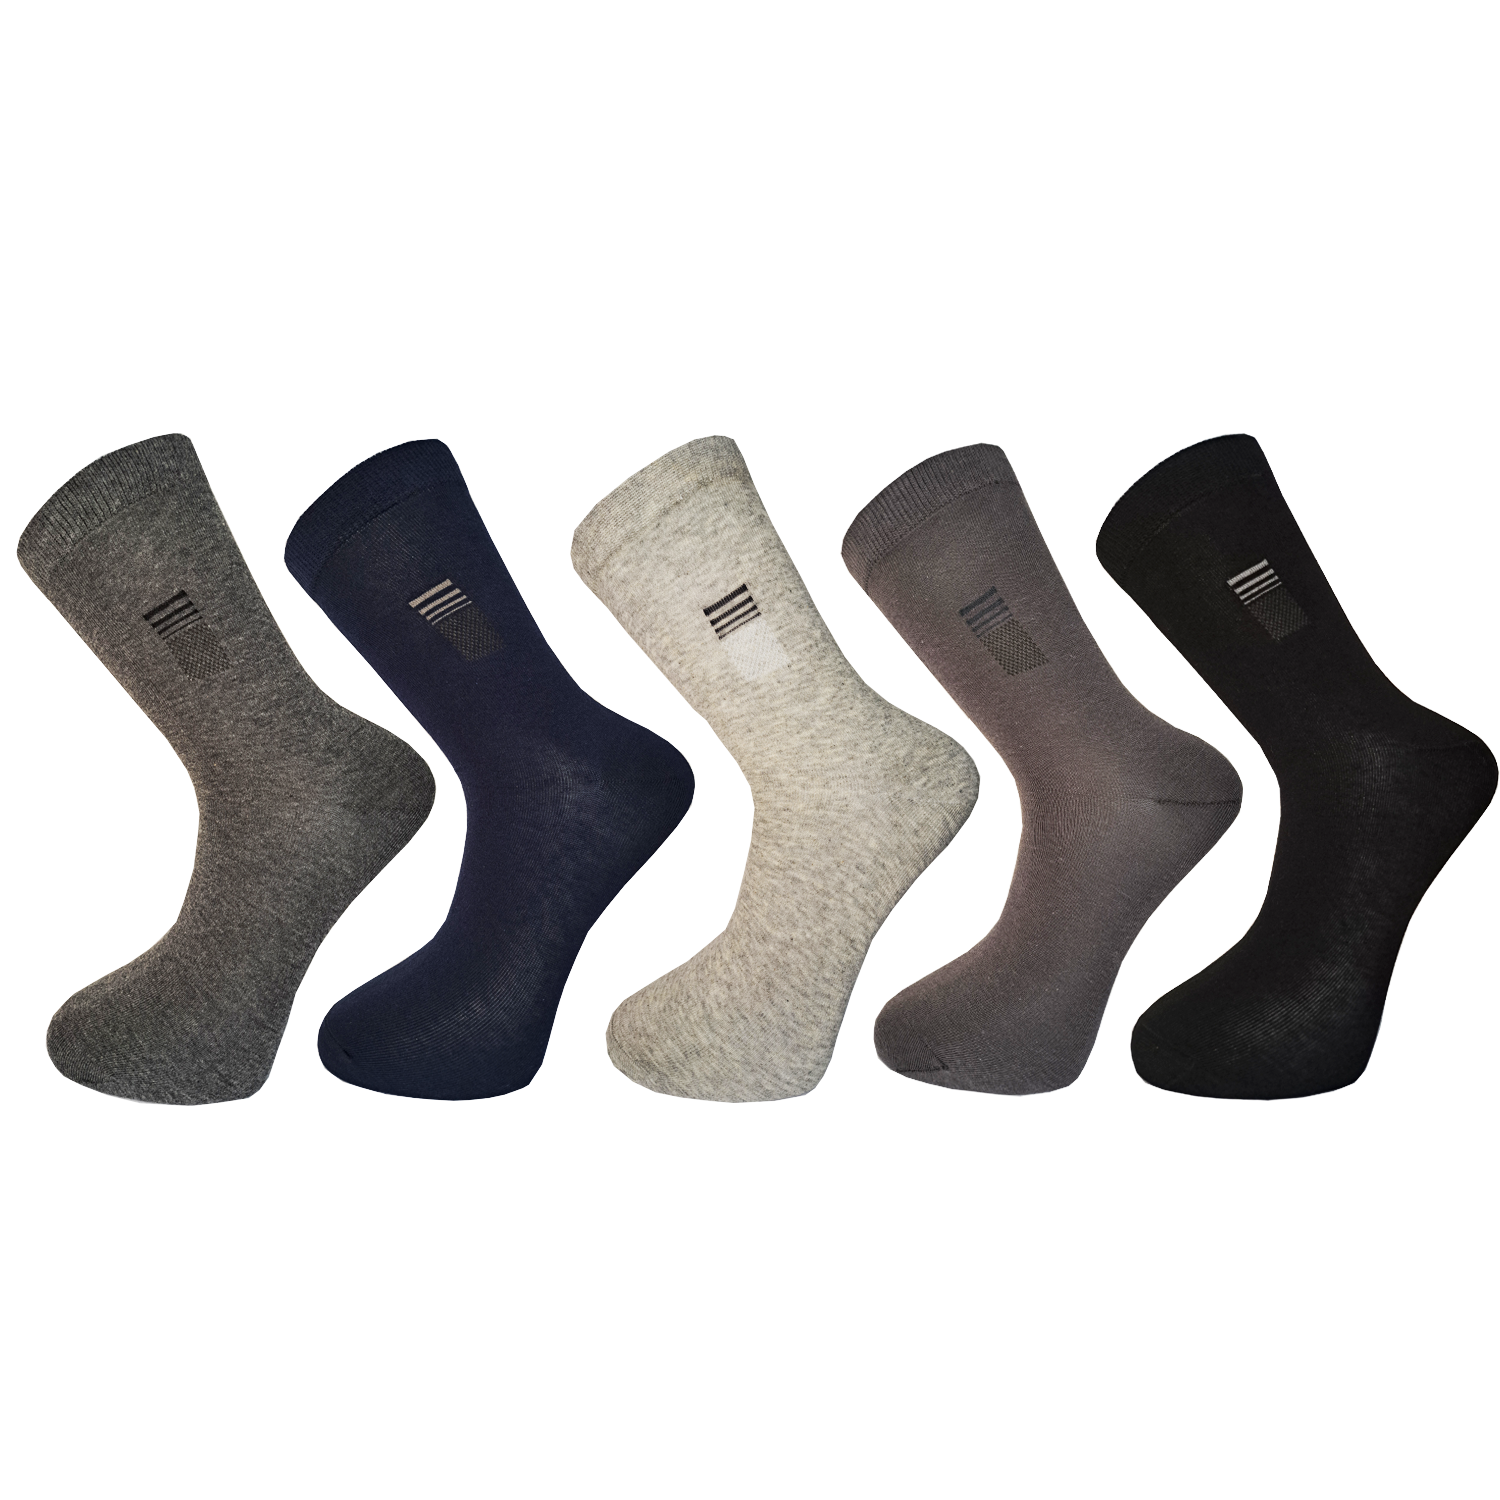 Pánské ponožky Aura.Via - FL1922, mix barev Barva: Mix barev, Velikost: 43-46